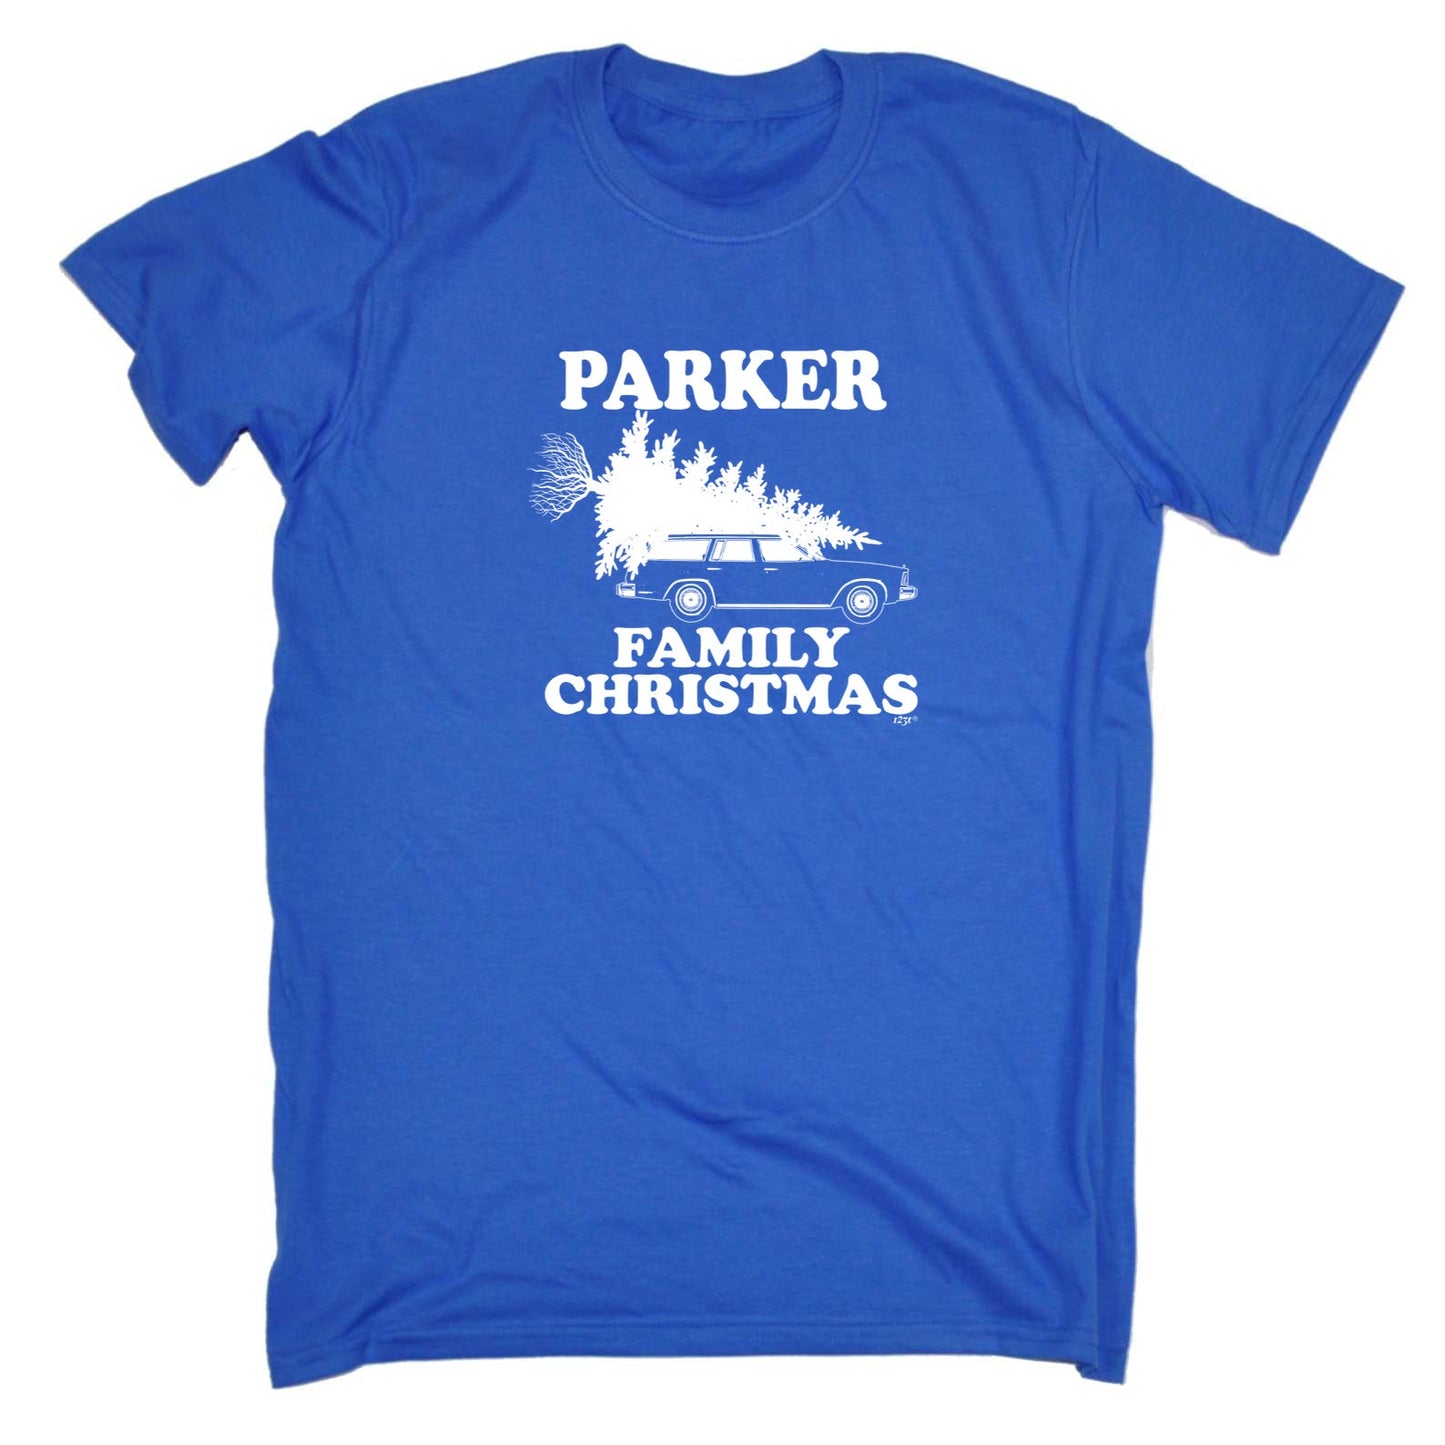 Family Christmas Parker - Mens Xmas Novelty T-Shirt / T Shirt